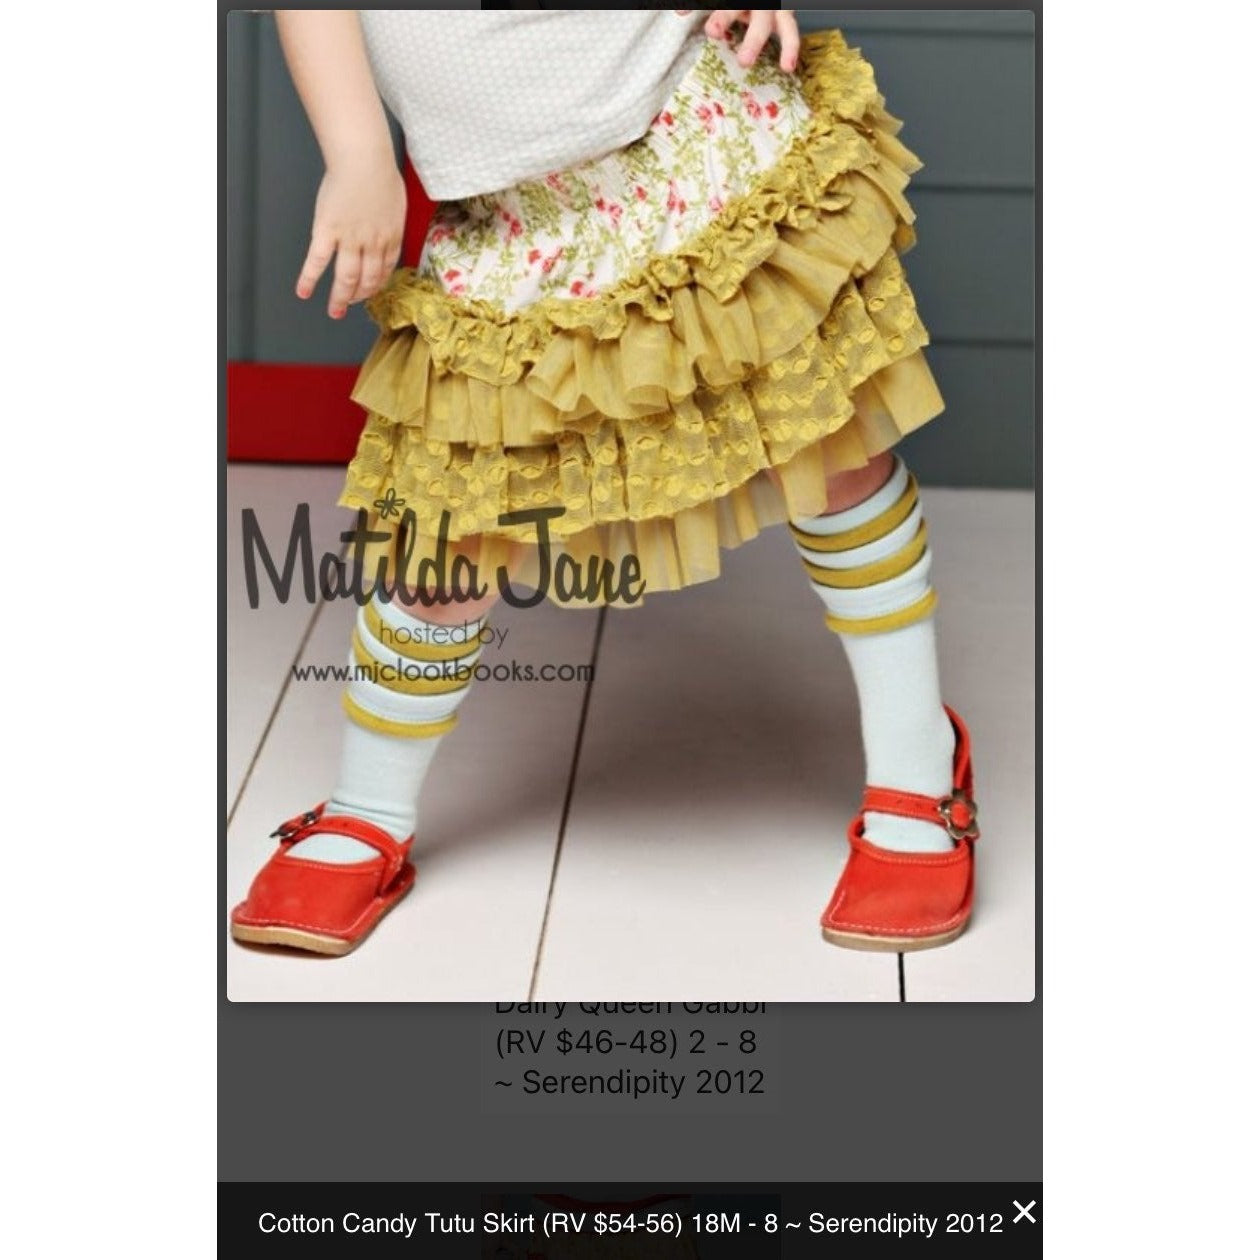 Size 4 Matilda Jane cotton candy tutu Skirt